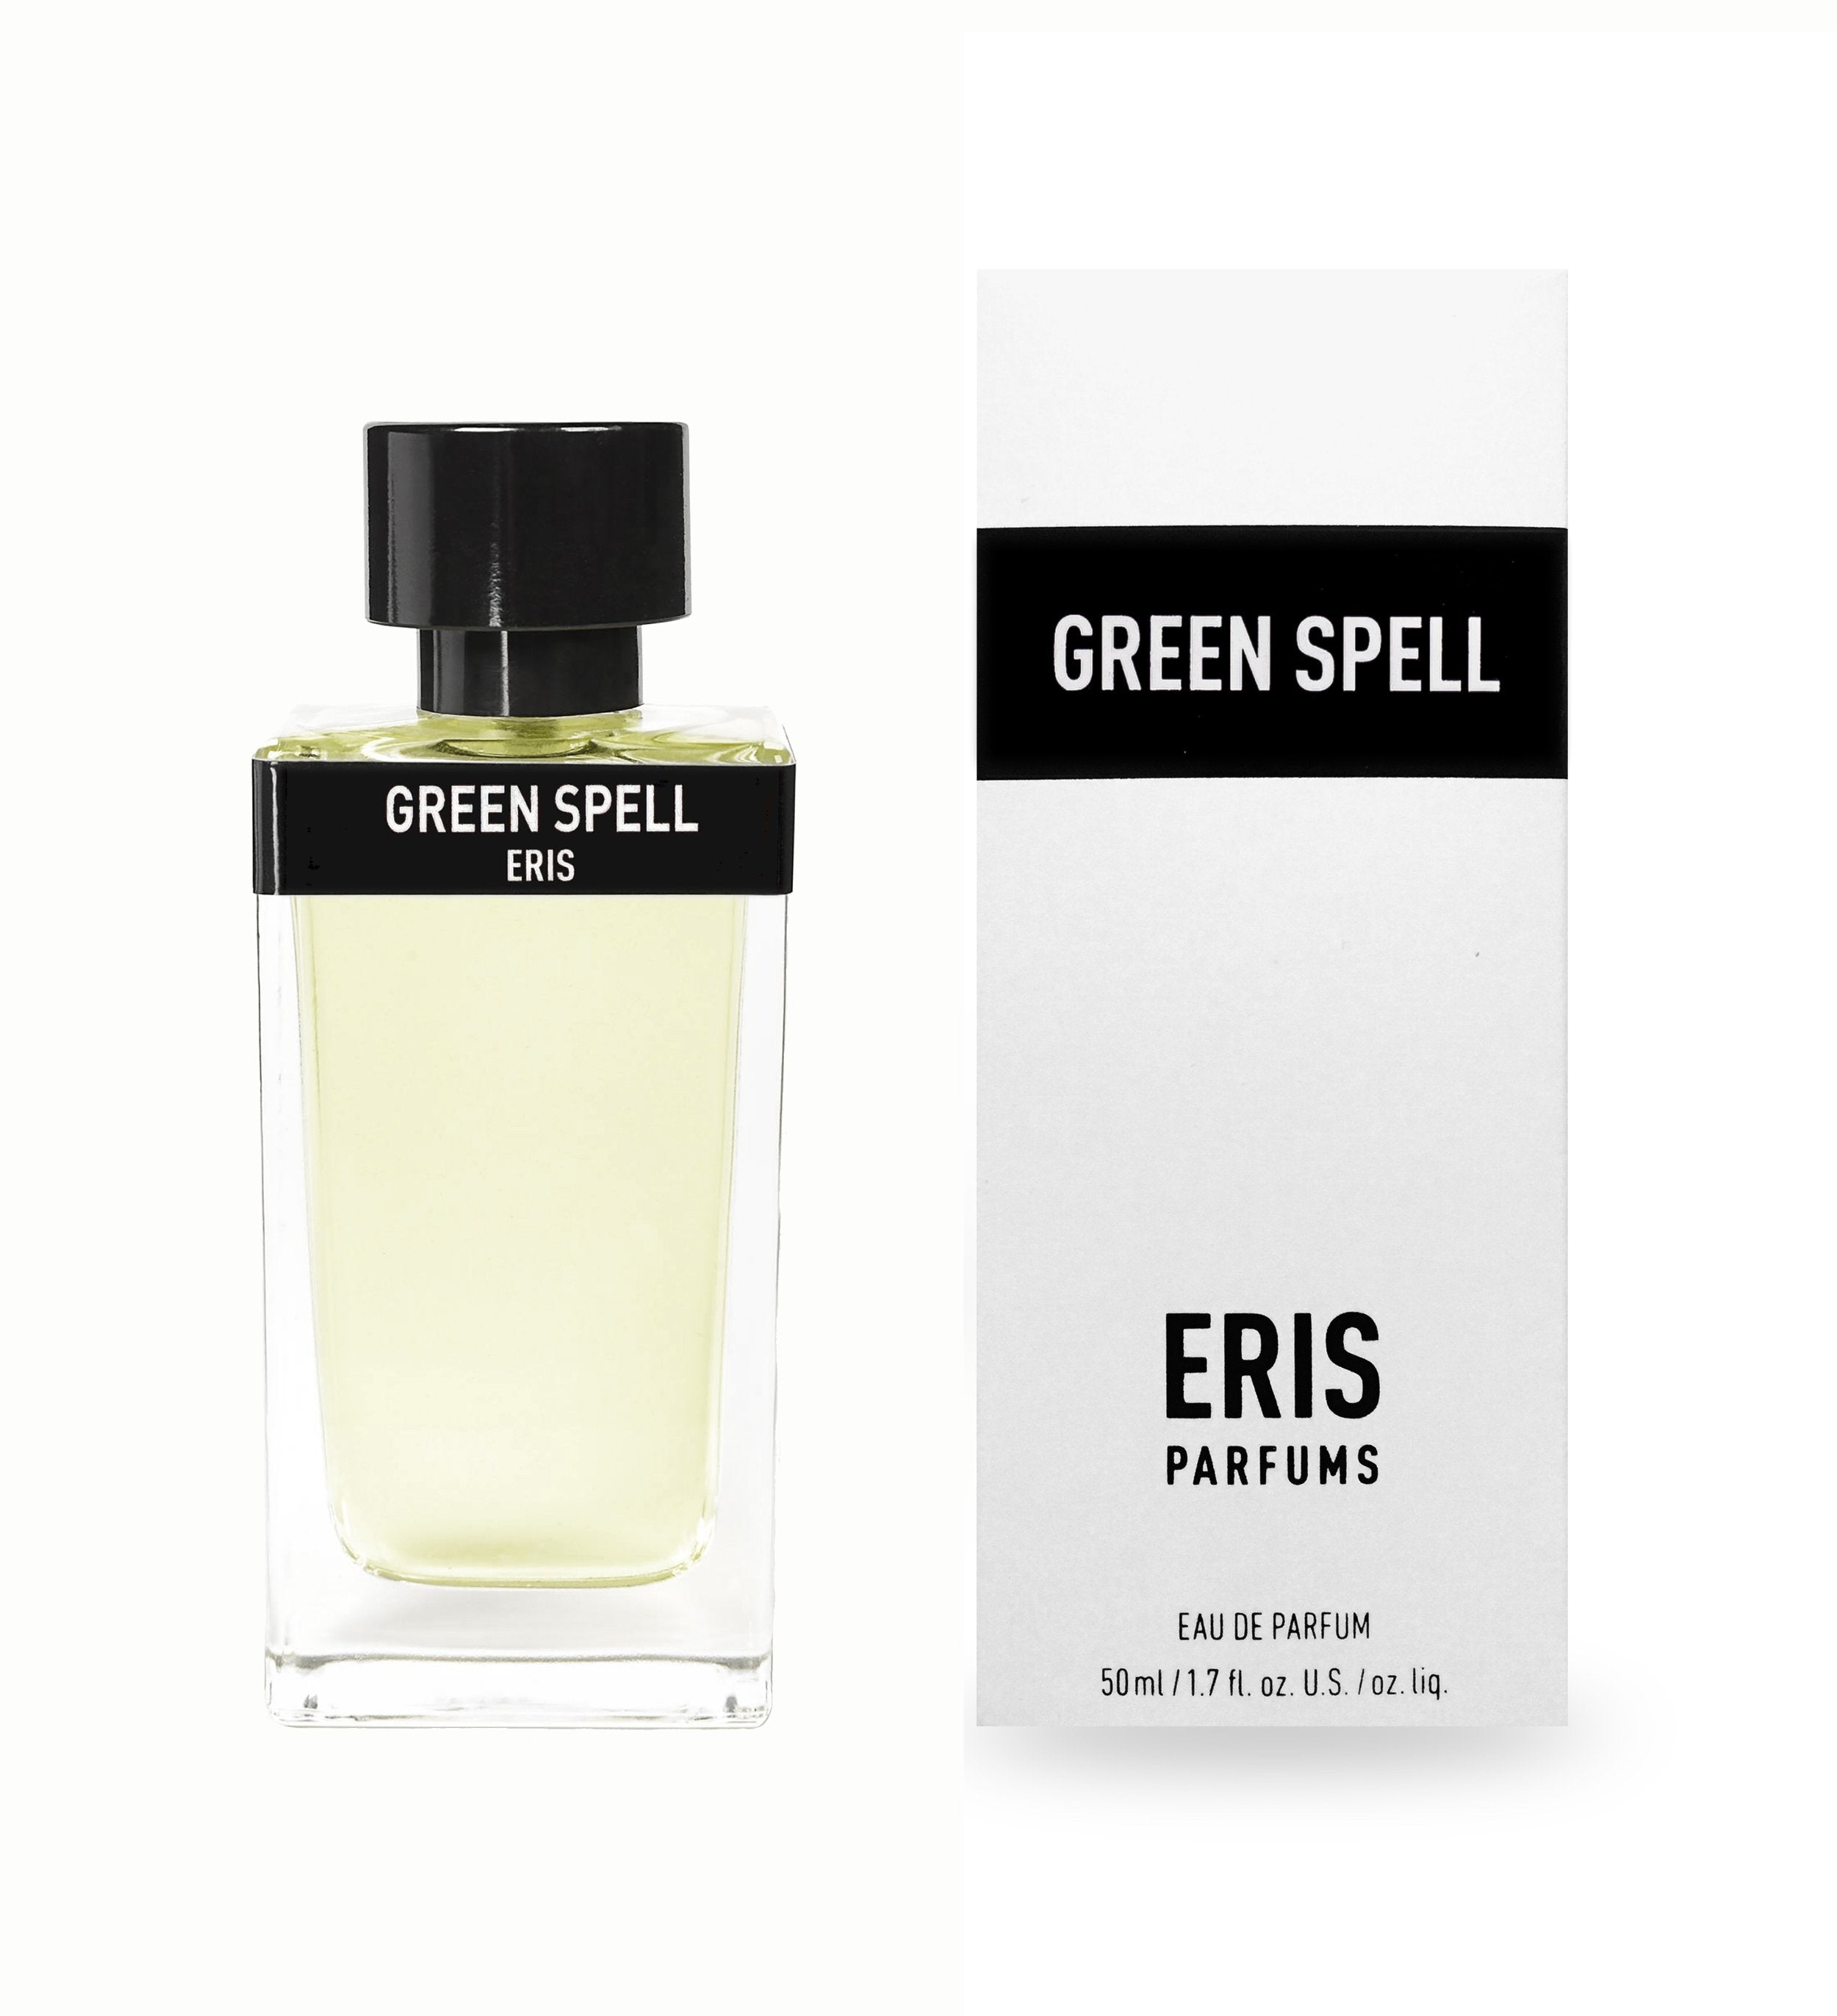 Explore GREEN SPELL Eau de Parfum – Eris Parfums